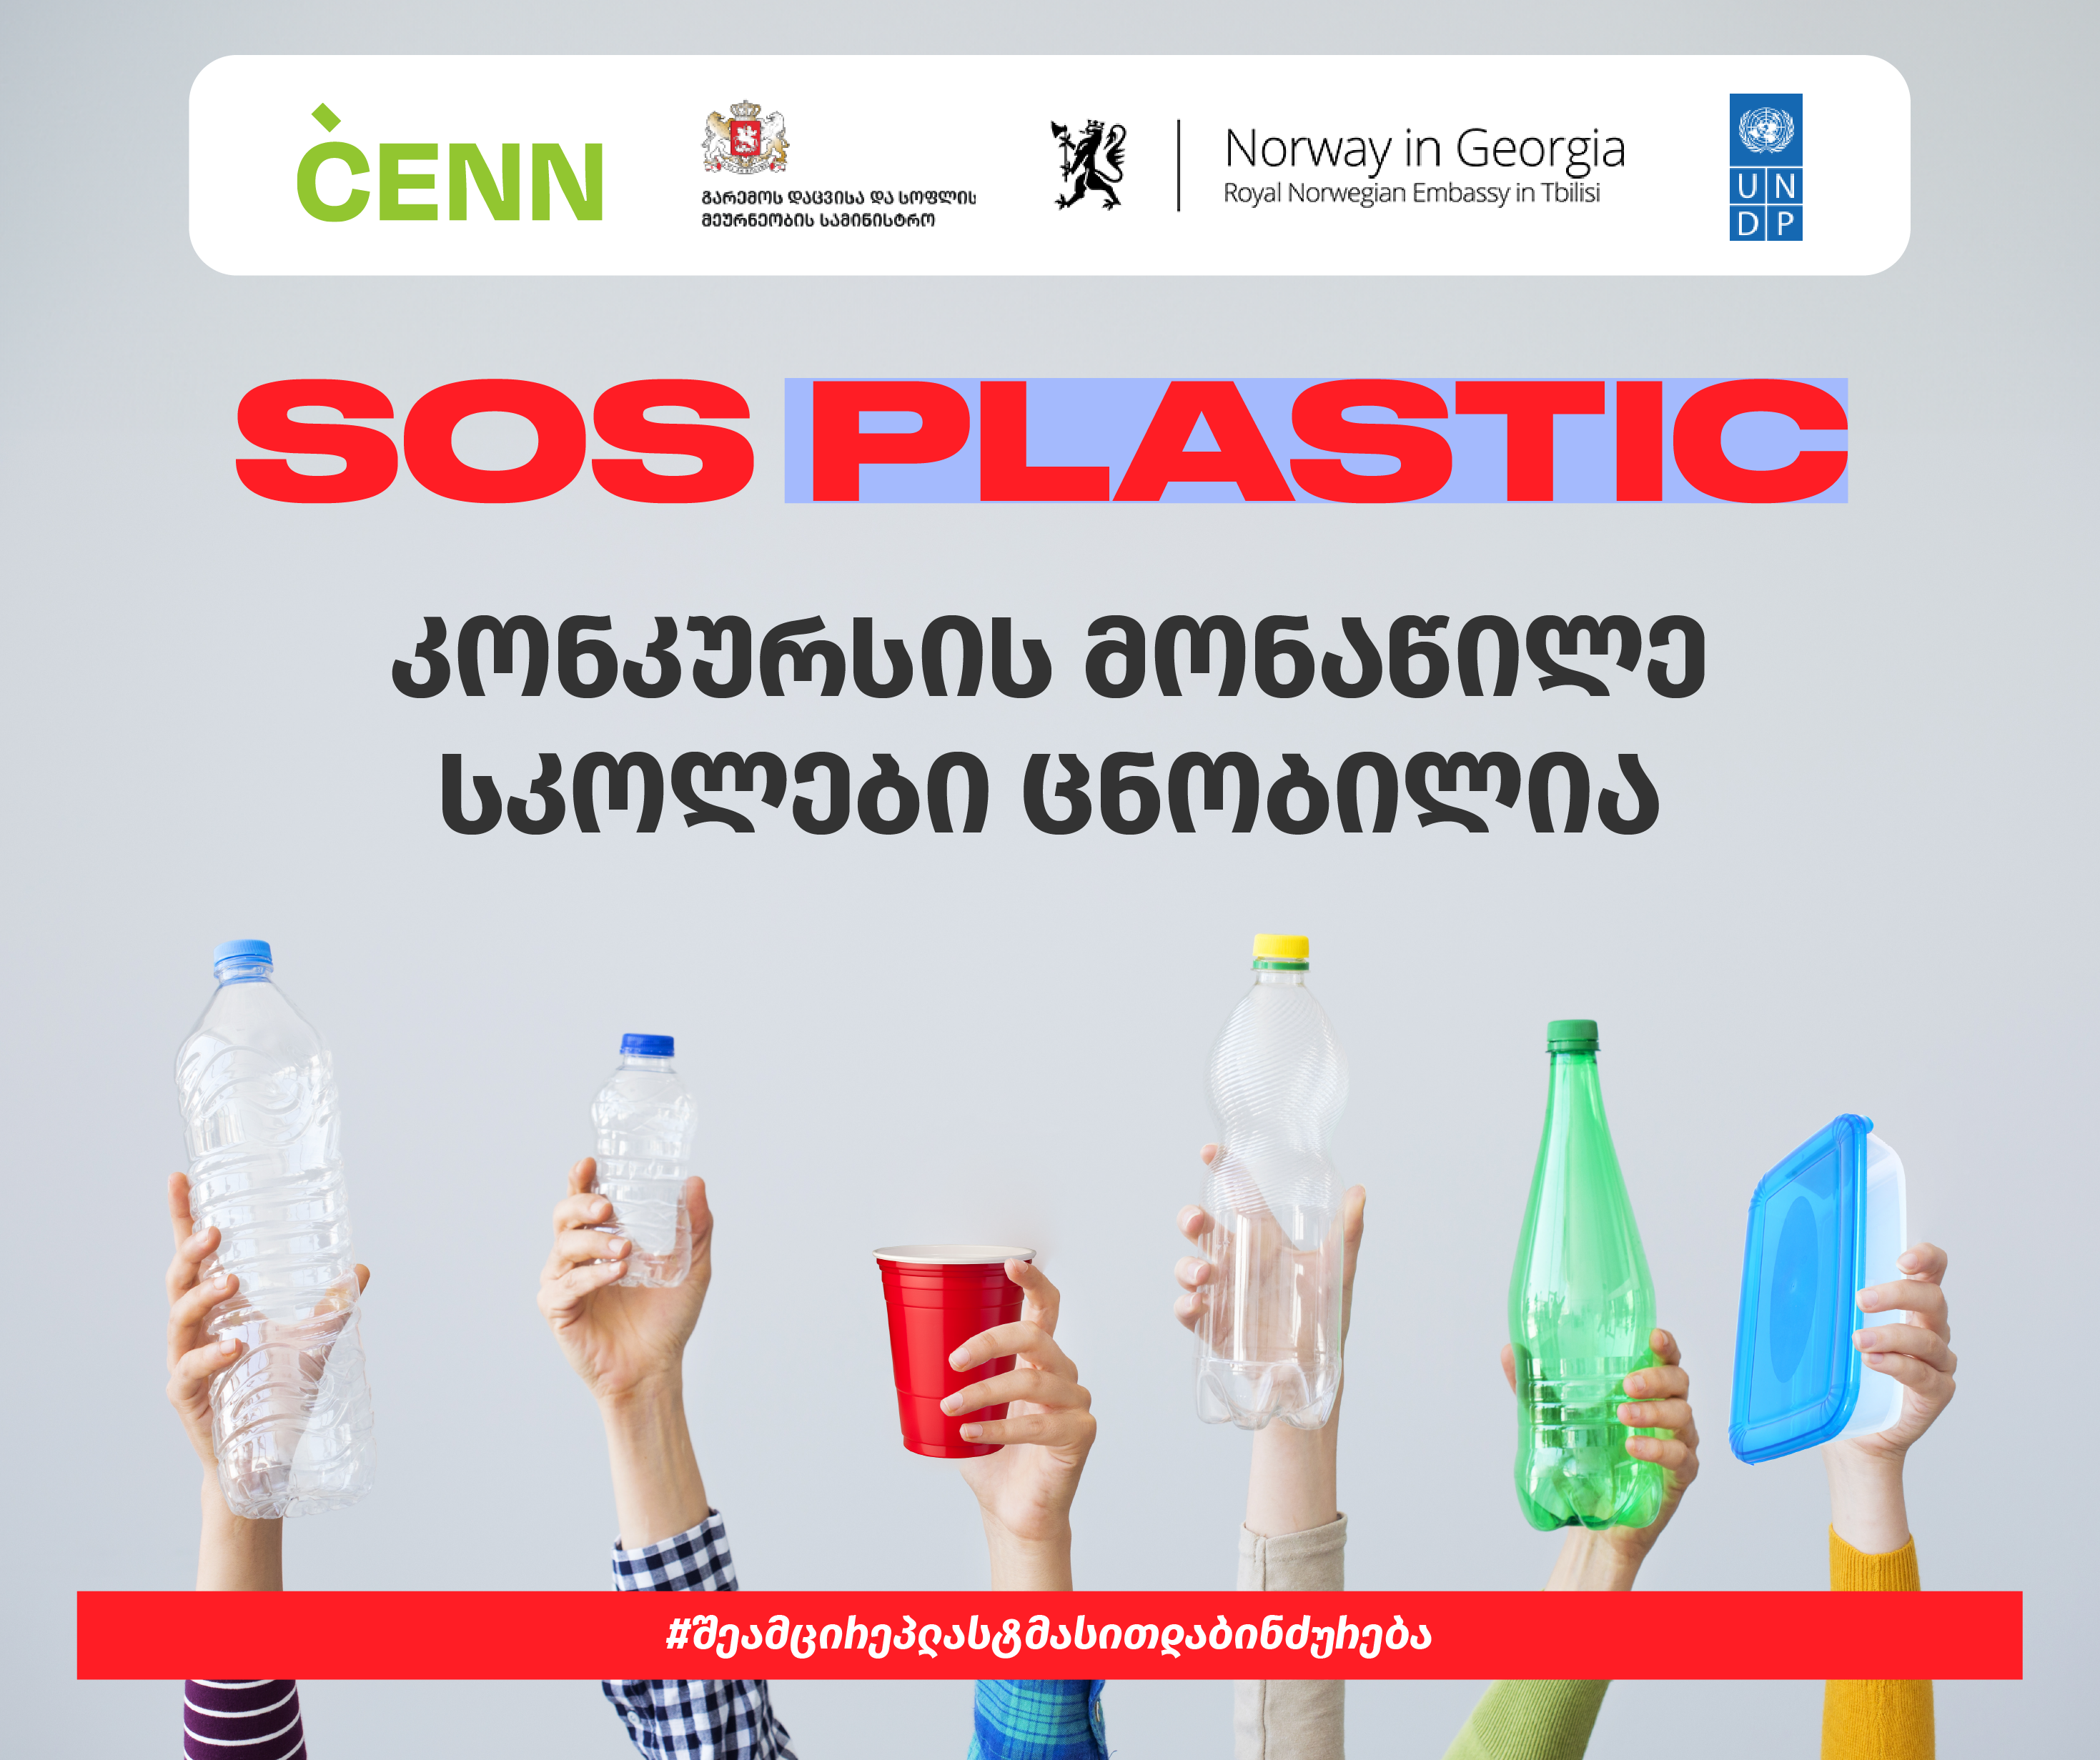 SOS Plastic კონკურსის მონაწილე 20 სკოლა ცნობილია